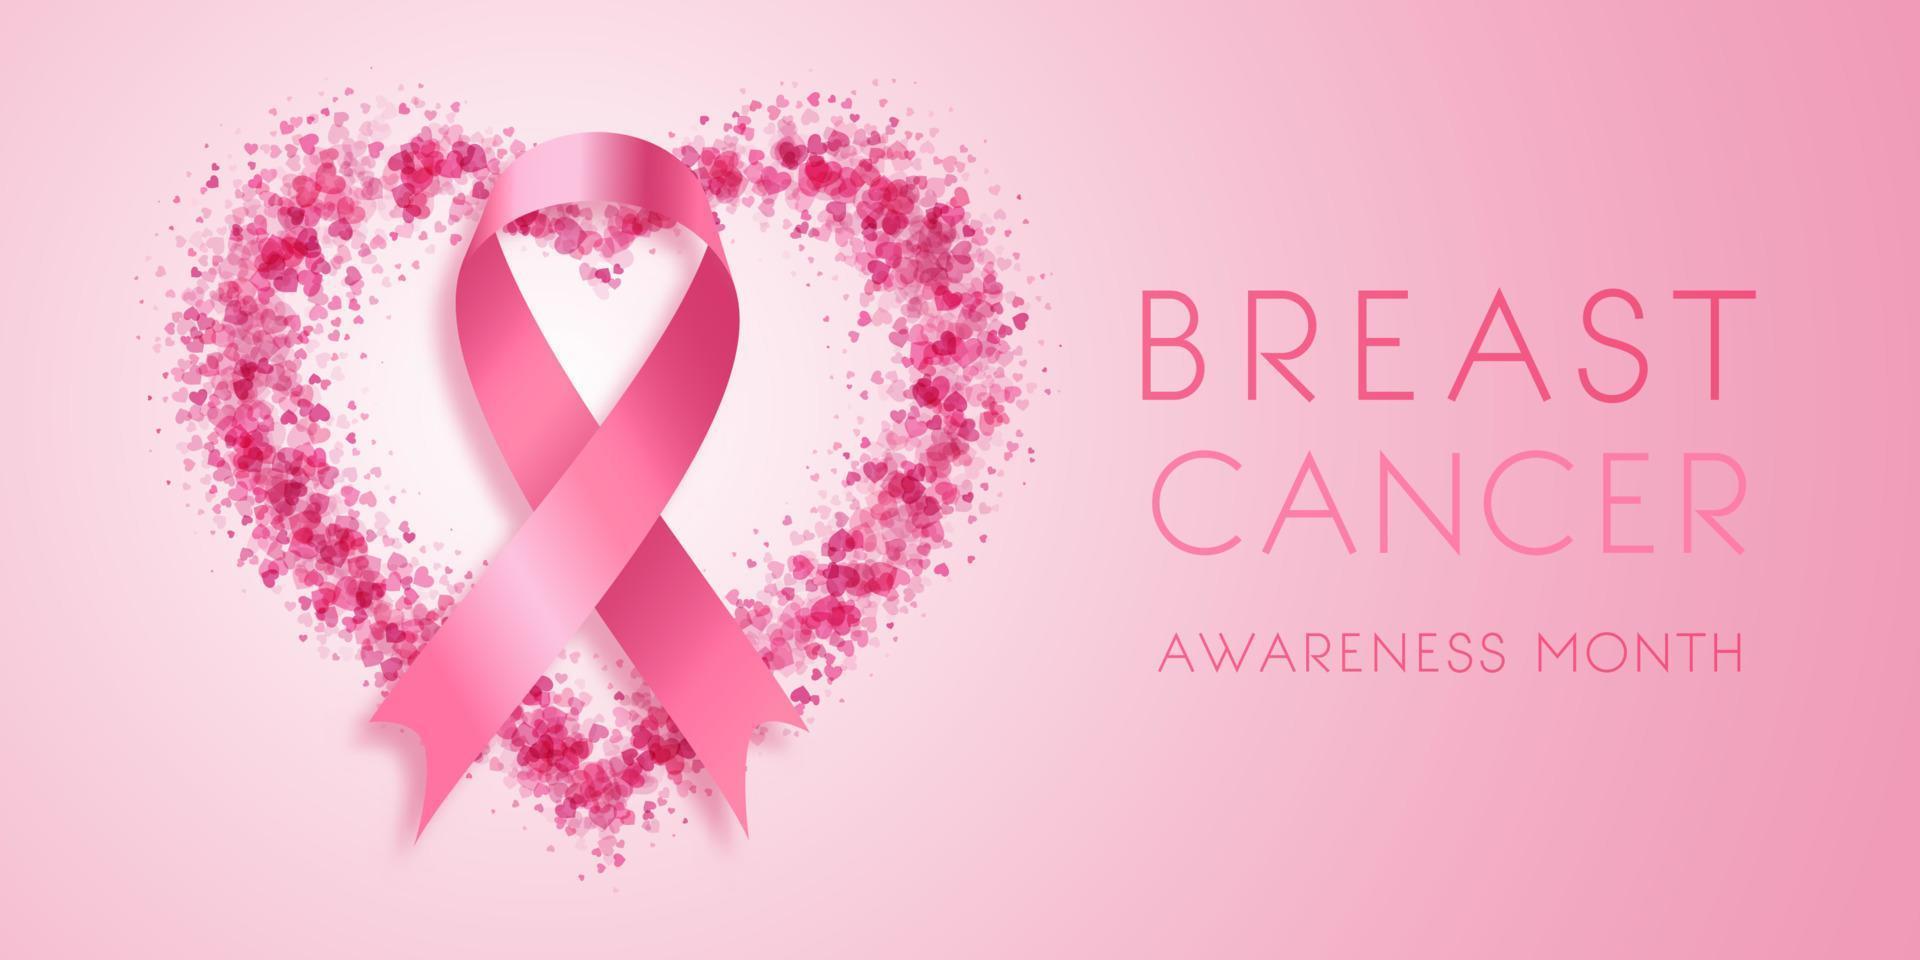 decorative breast cancer awareness month banner design vector